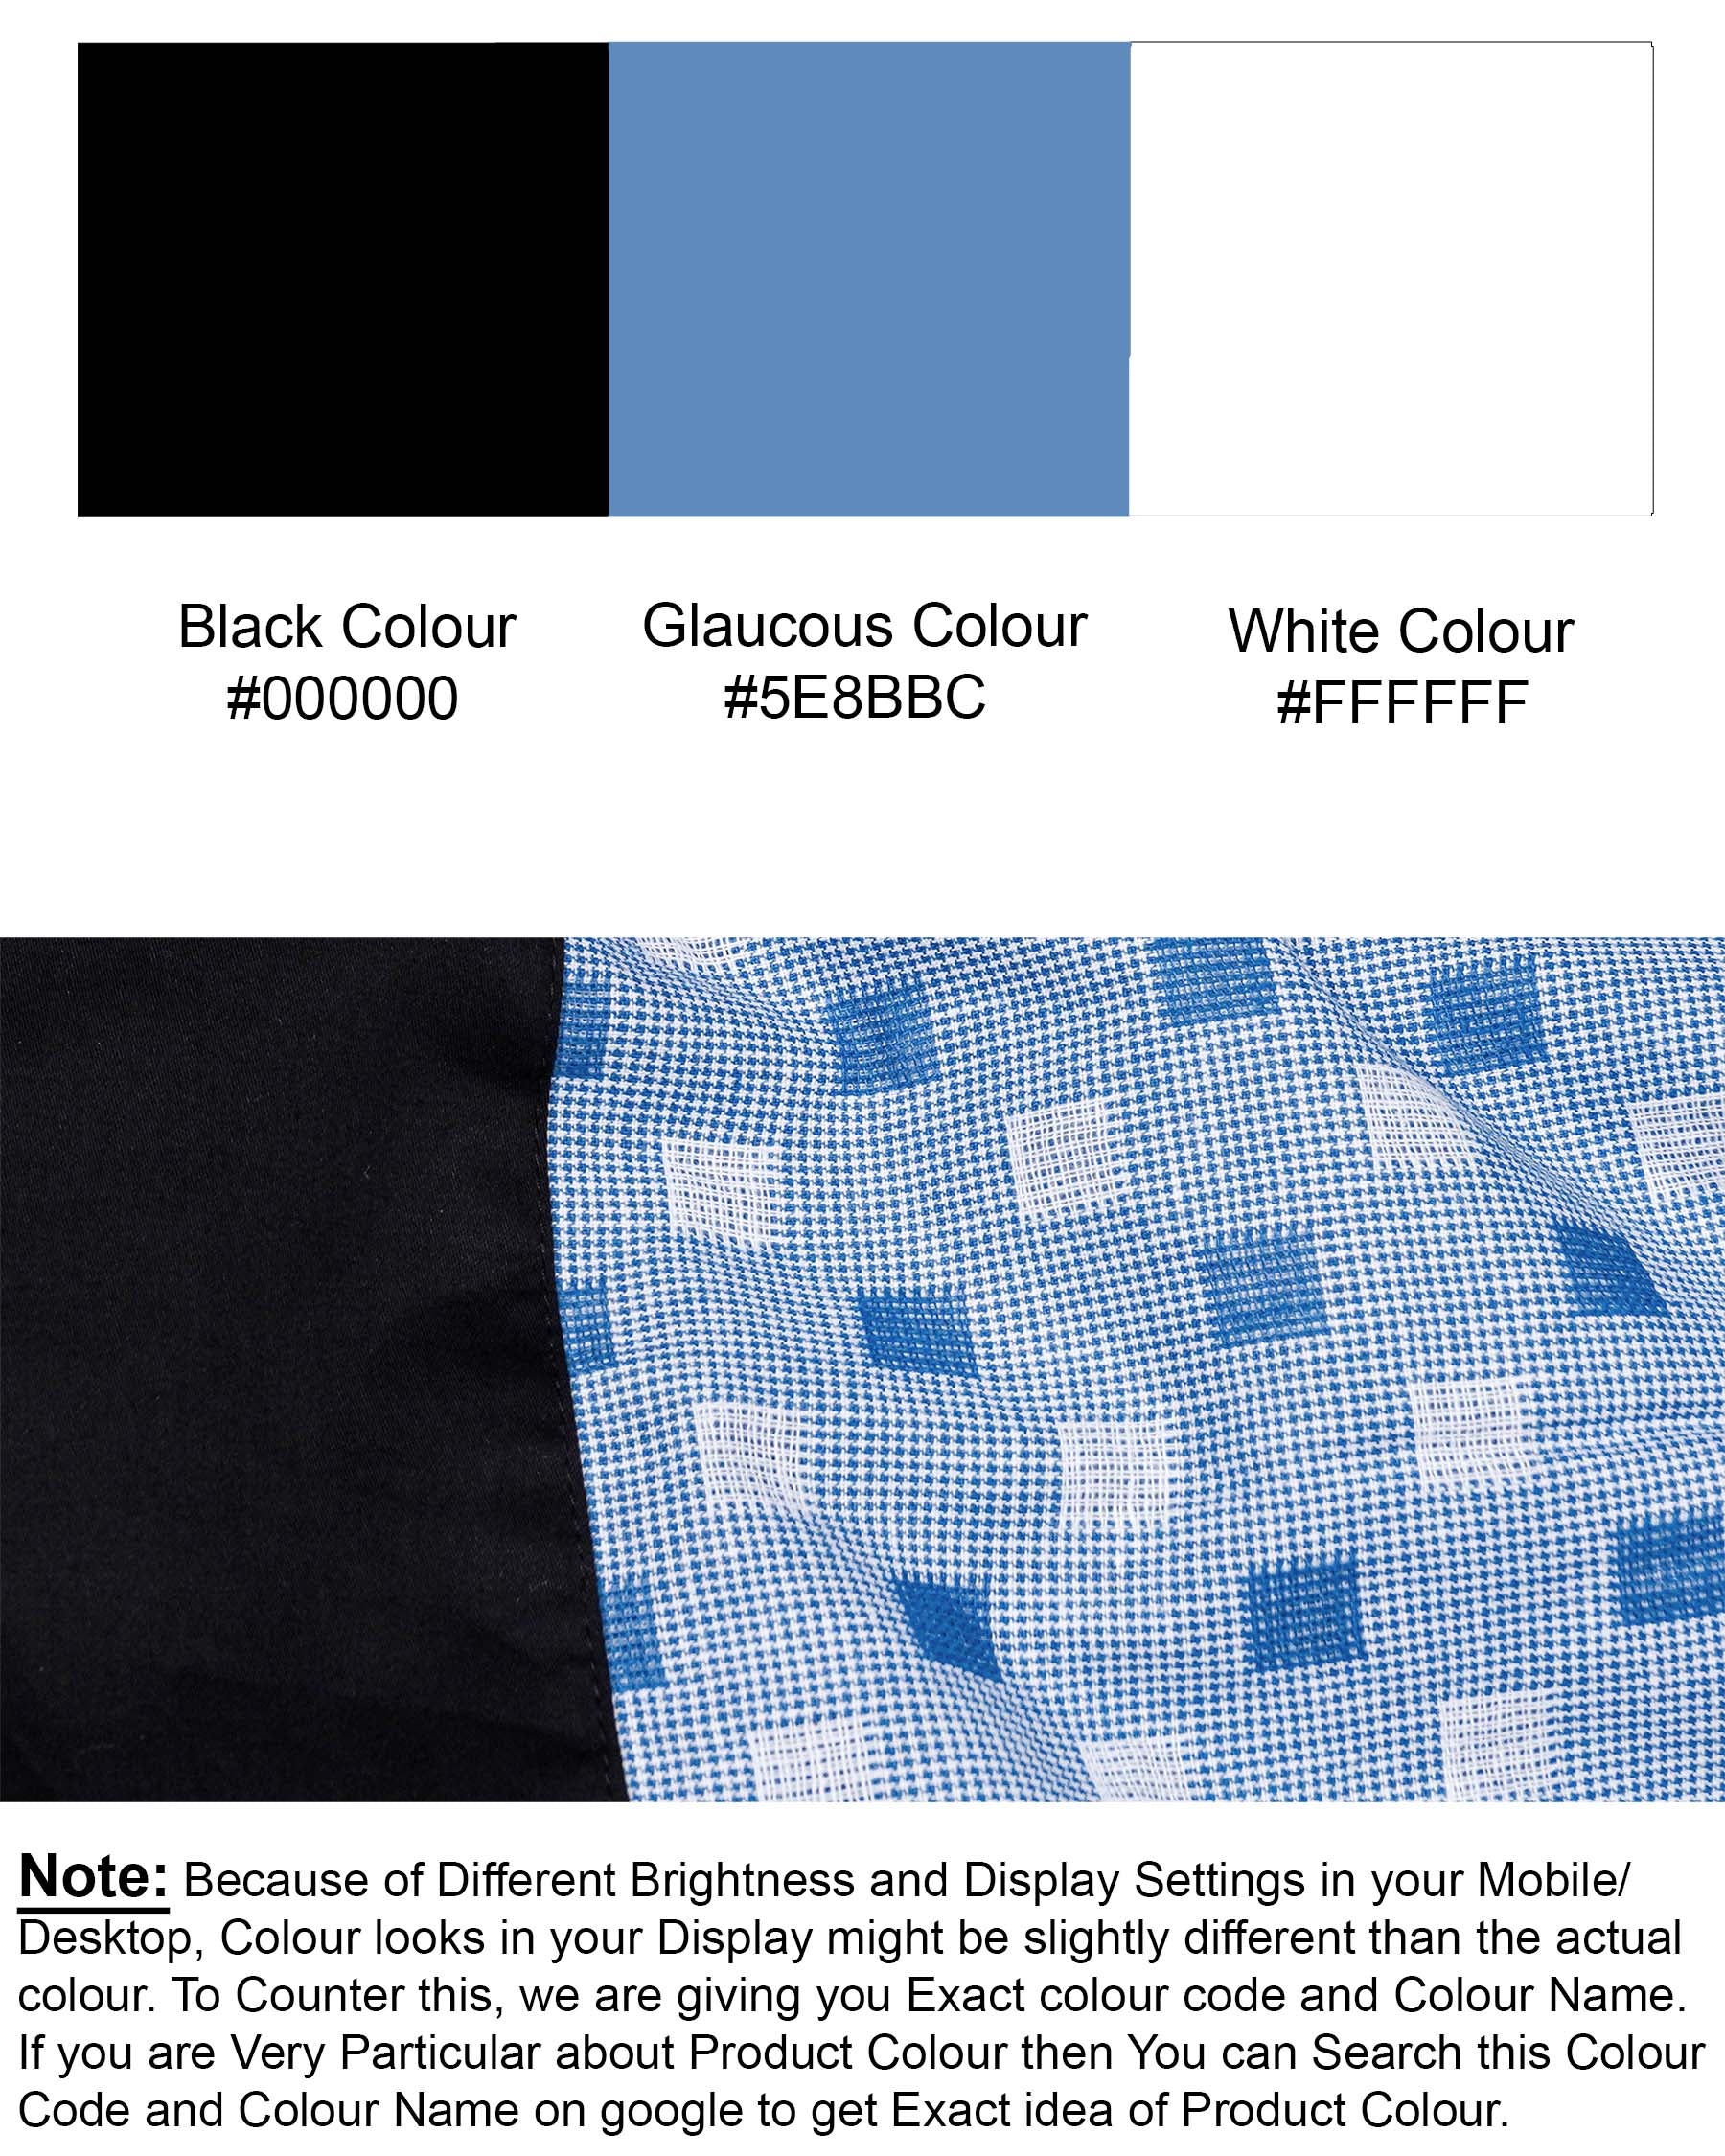 Glaucous Blue and Black Dobby Textured Premium Giza Cotton Designer Shirt 7685-P115-38, 7685-P115-H-38, 7685-P115-39,7685-P115-H-39, 7685-P115-40, 7685-P115-H-40, 7685-P115-42, 7685-P115-H-42, 7685-P115-44, 7685-P115-H-44, 7685-P115-46, 7685-P115-H-46, 7685-P115-48, 7685-P115-H-48, 7685-P115-50, 7685-P115-H-50, 7685-P115-52, 7685-P115-H-52